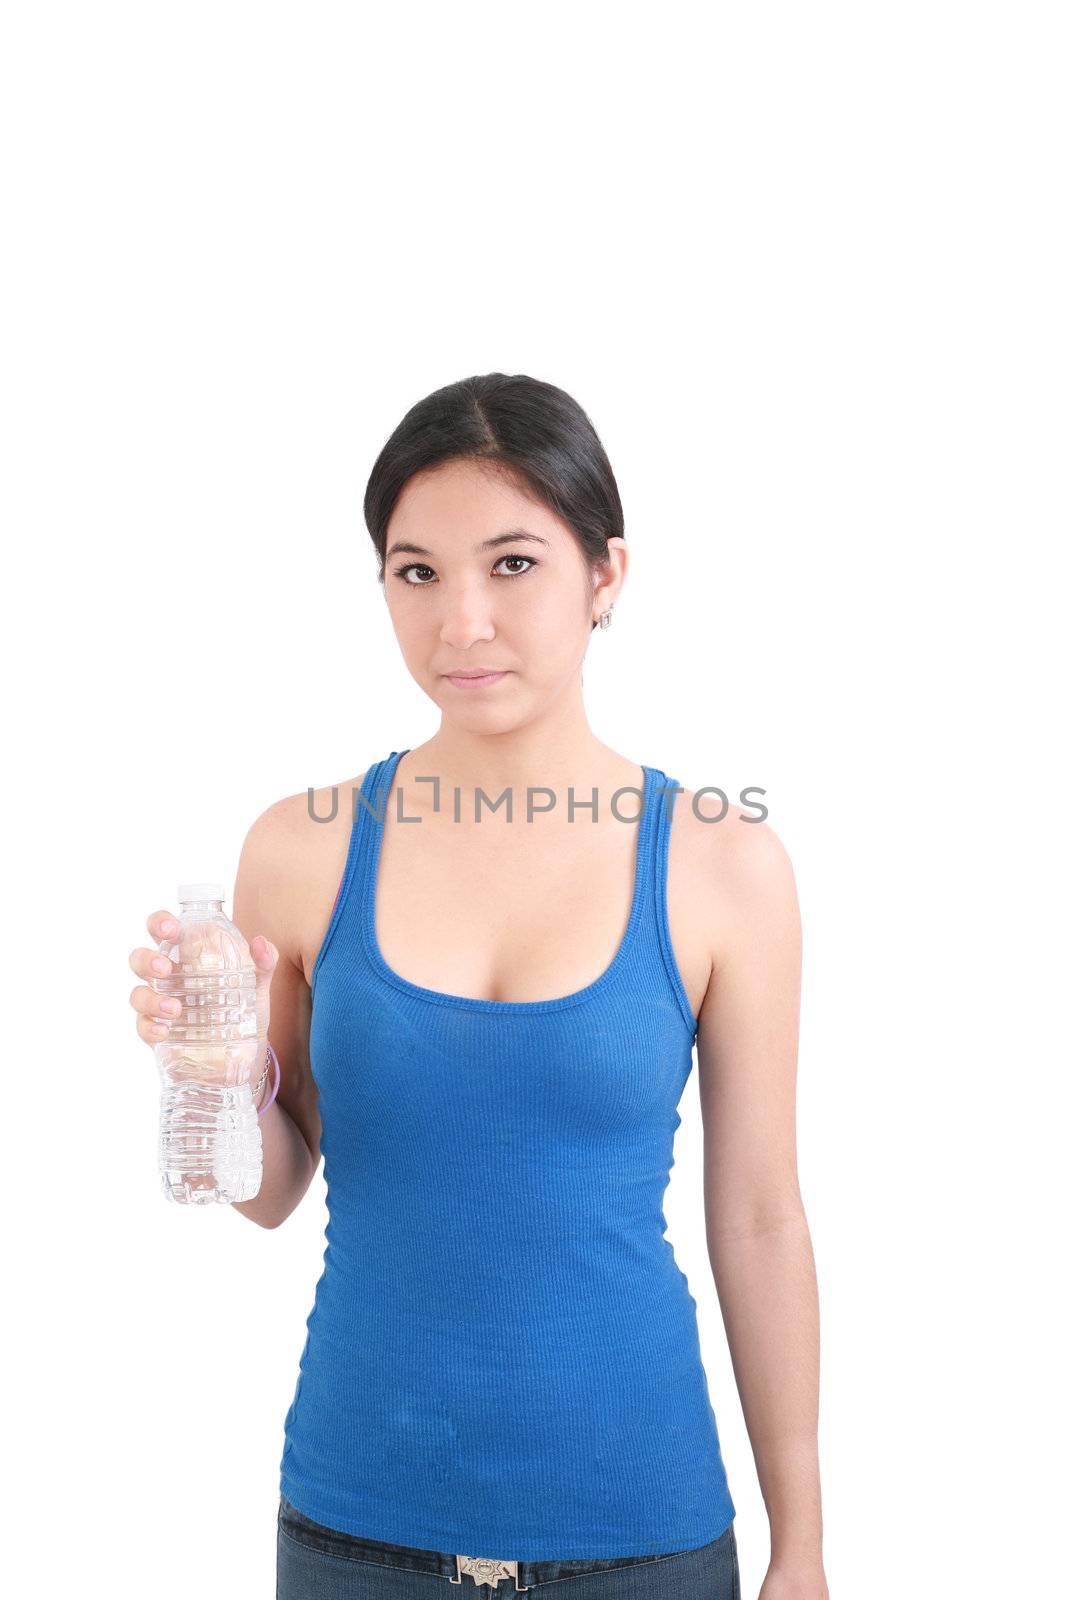 portrait of woman in fitness attire holding water bottle and smi by dacasdo